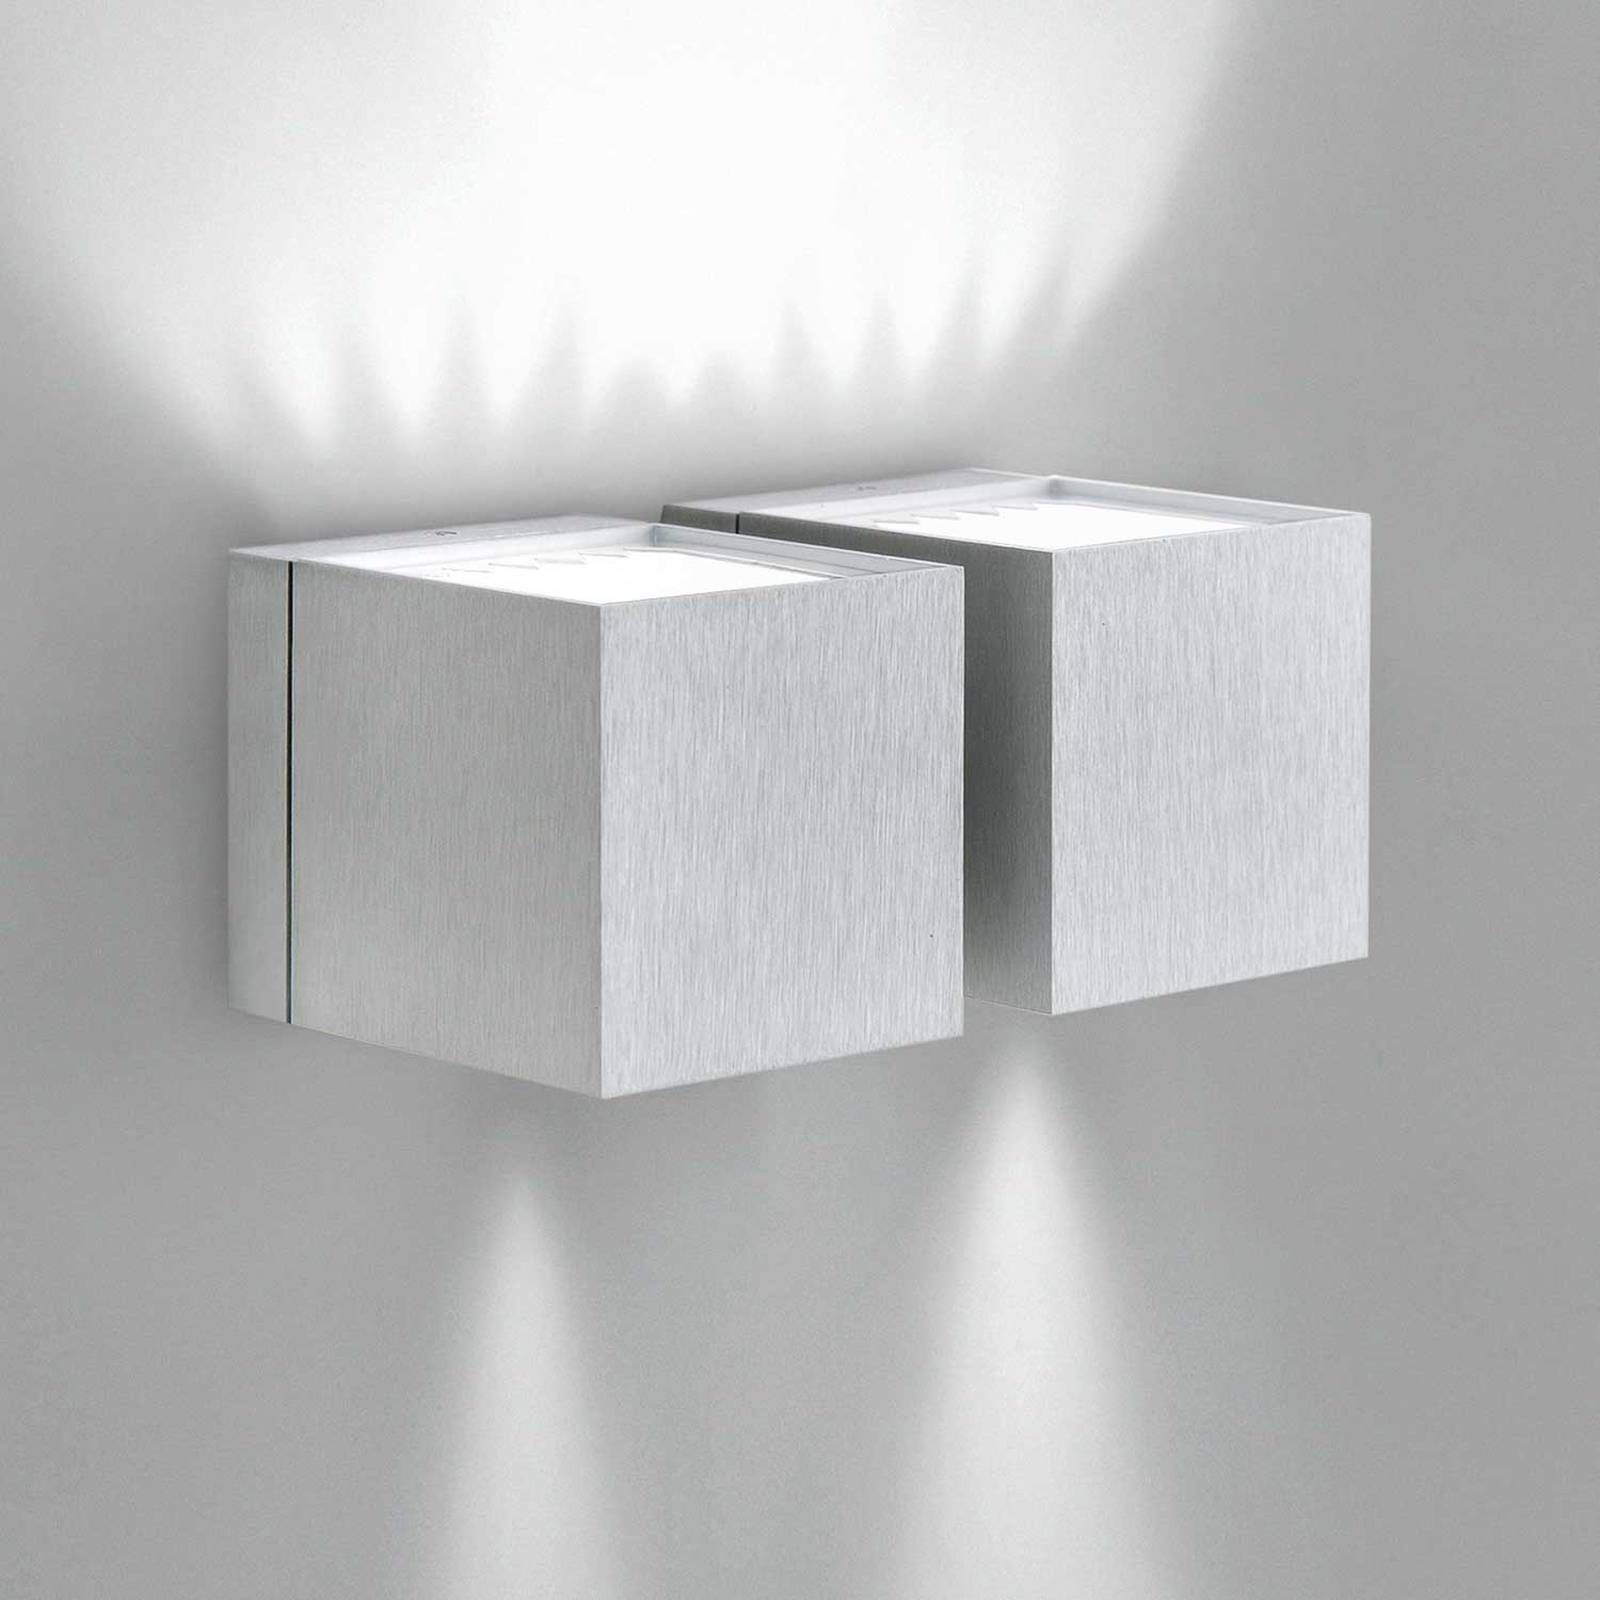 Milan Iluminación Dau – nástenné svietidlo up-down hliník 2-pl, Obývacia izba / jedáleň, hliník, G9, 53W, L: 18 cm, K: 8cm